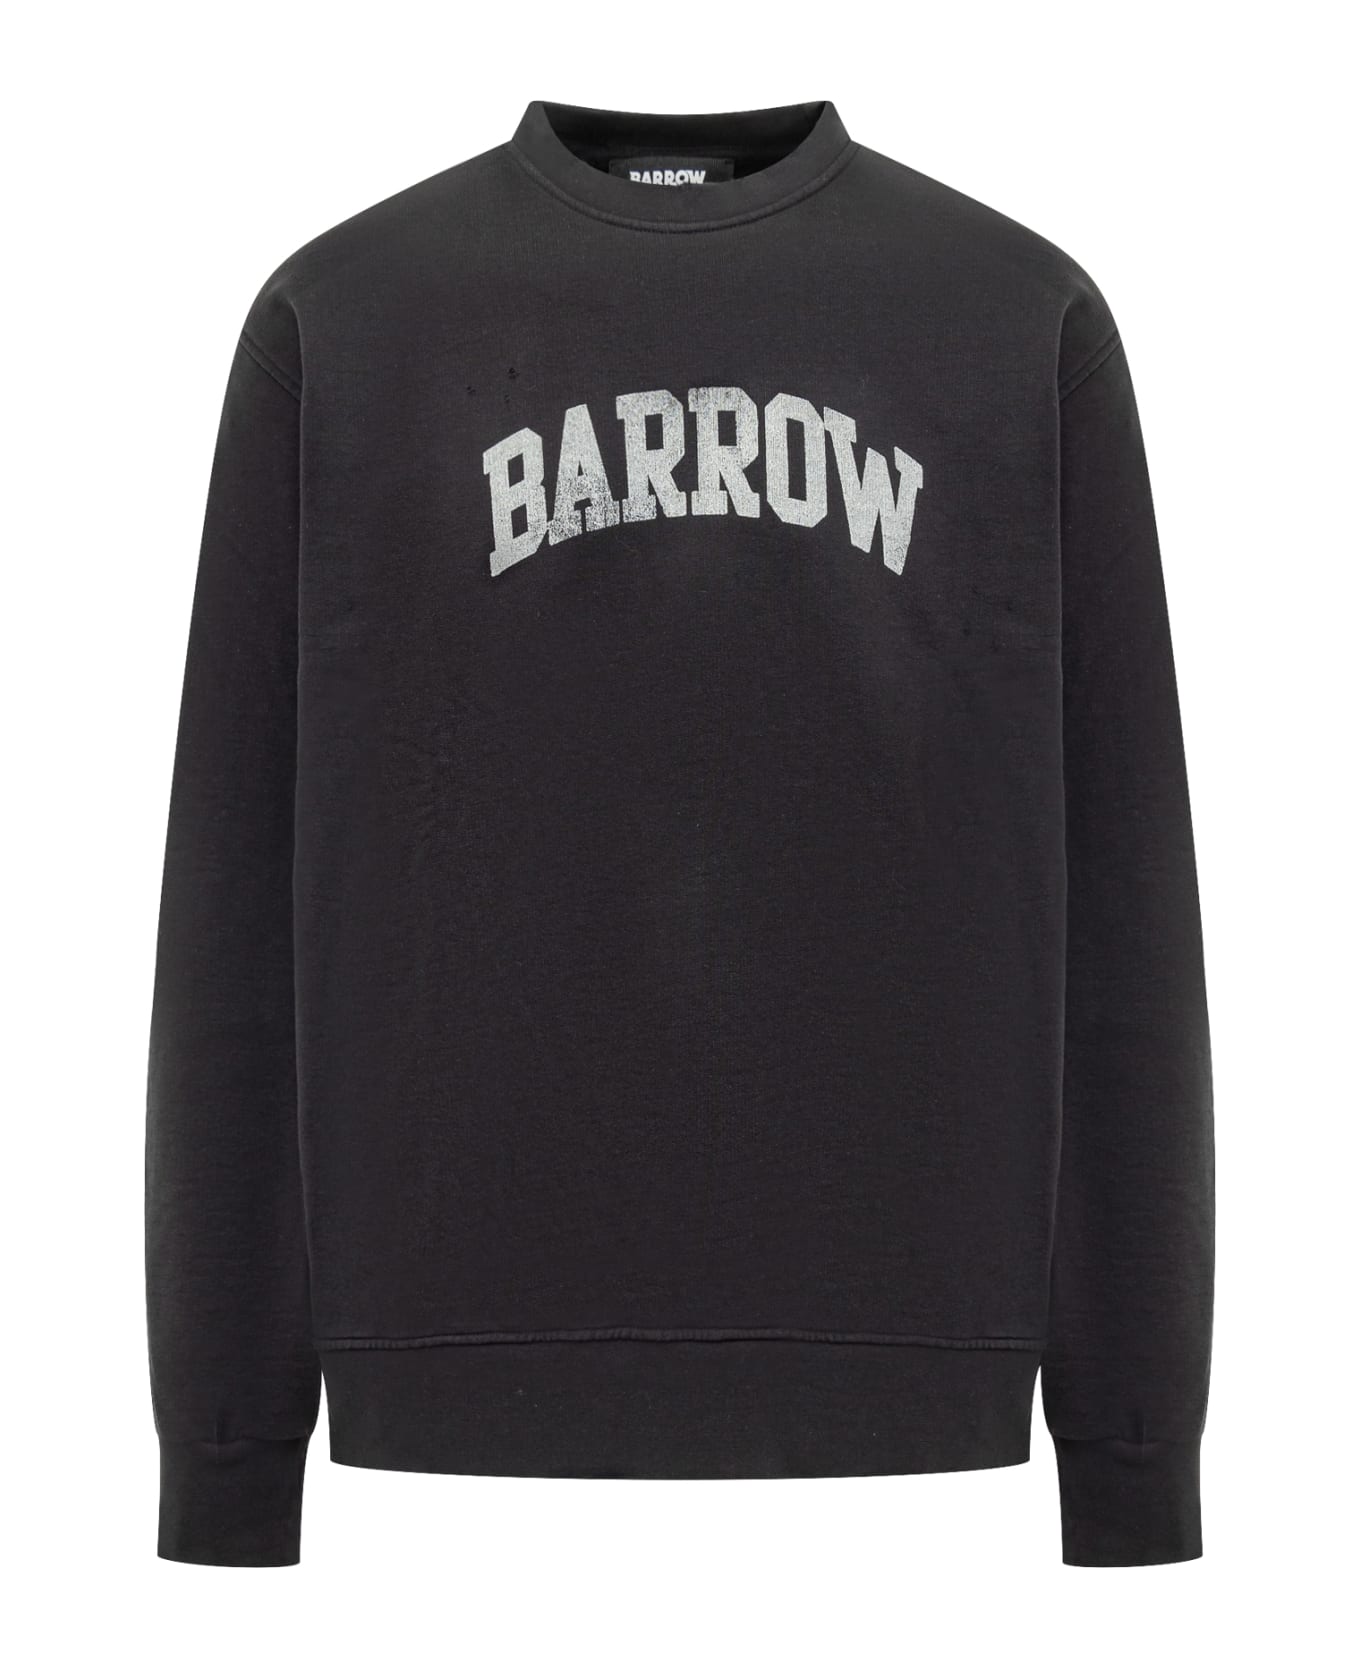 Barrow Barow Sweatshirt - NERO/BLACK